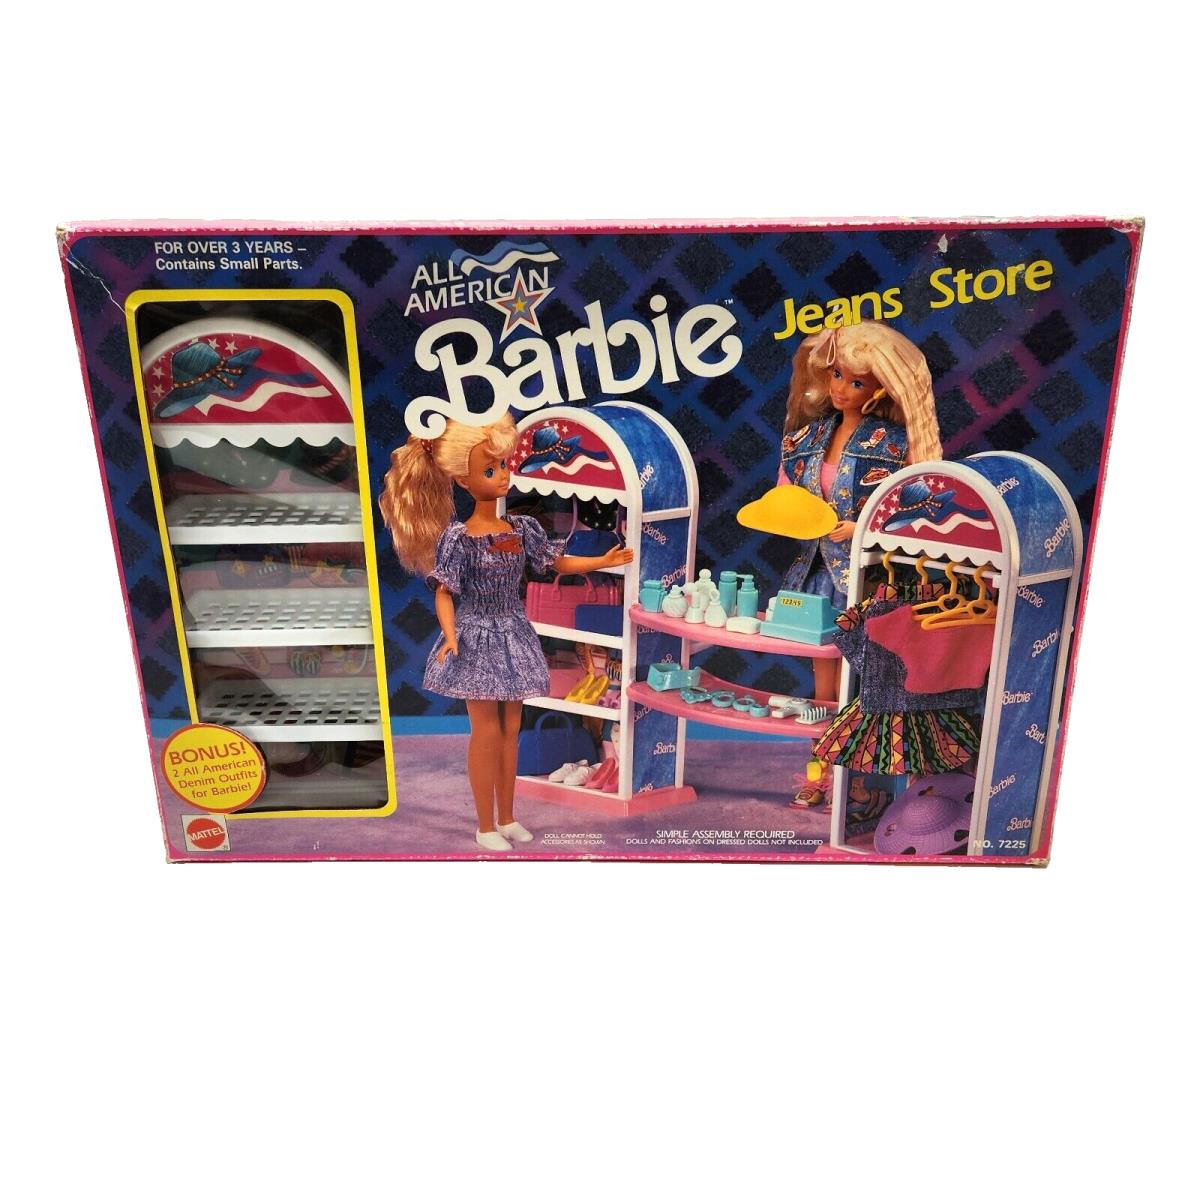 Vintage 1990 Mattel All American Barbie Jeans Store Complete Box 7225